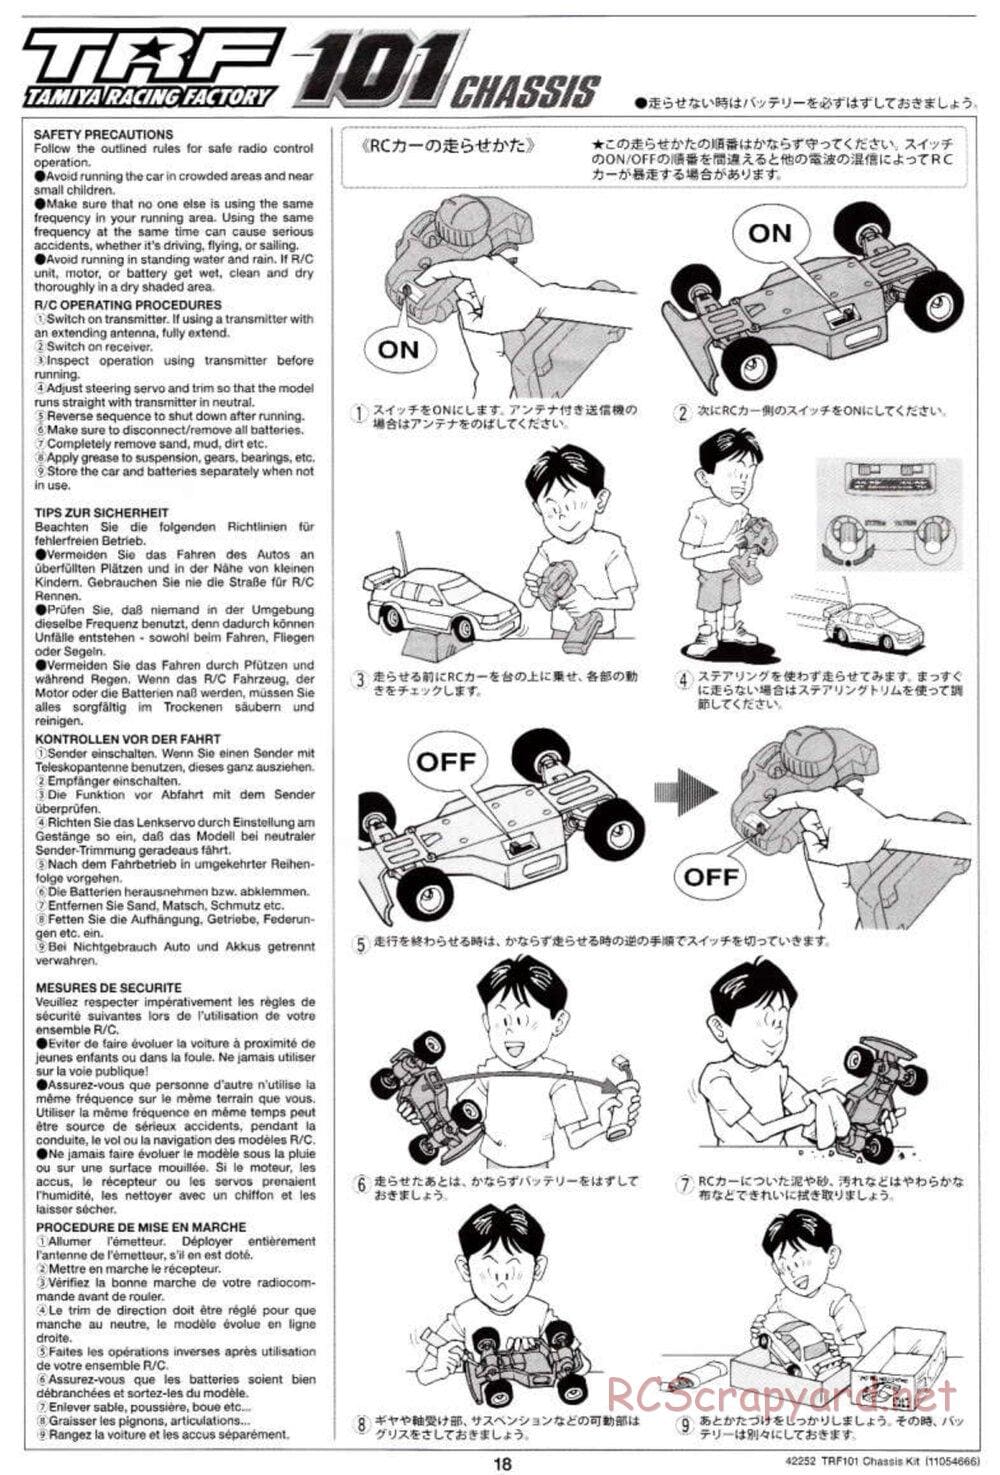 Tamiya - TRF101 Chassis - Manual - Page 18